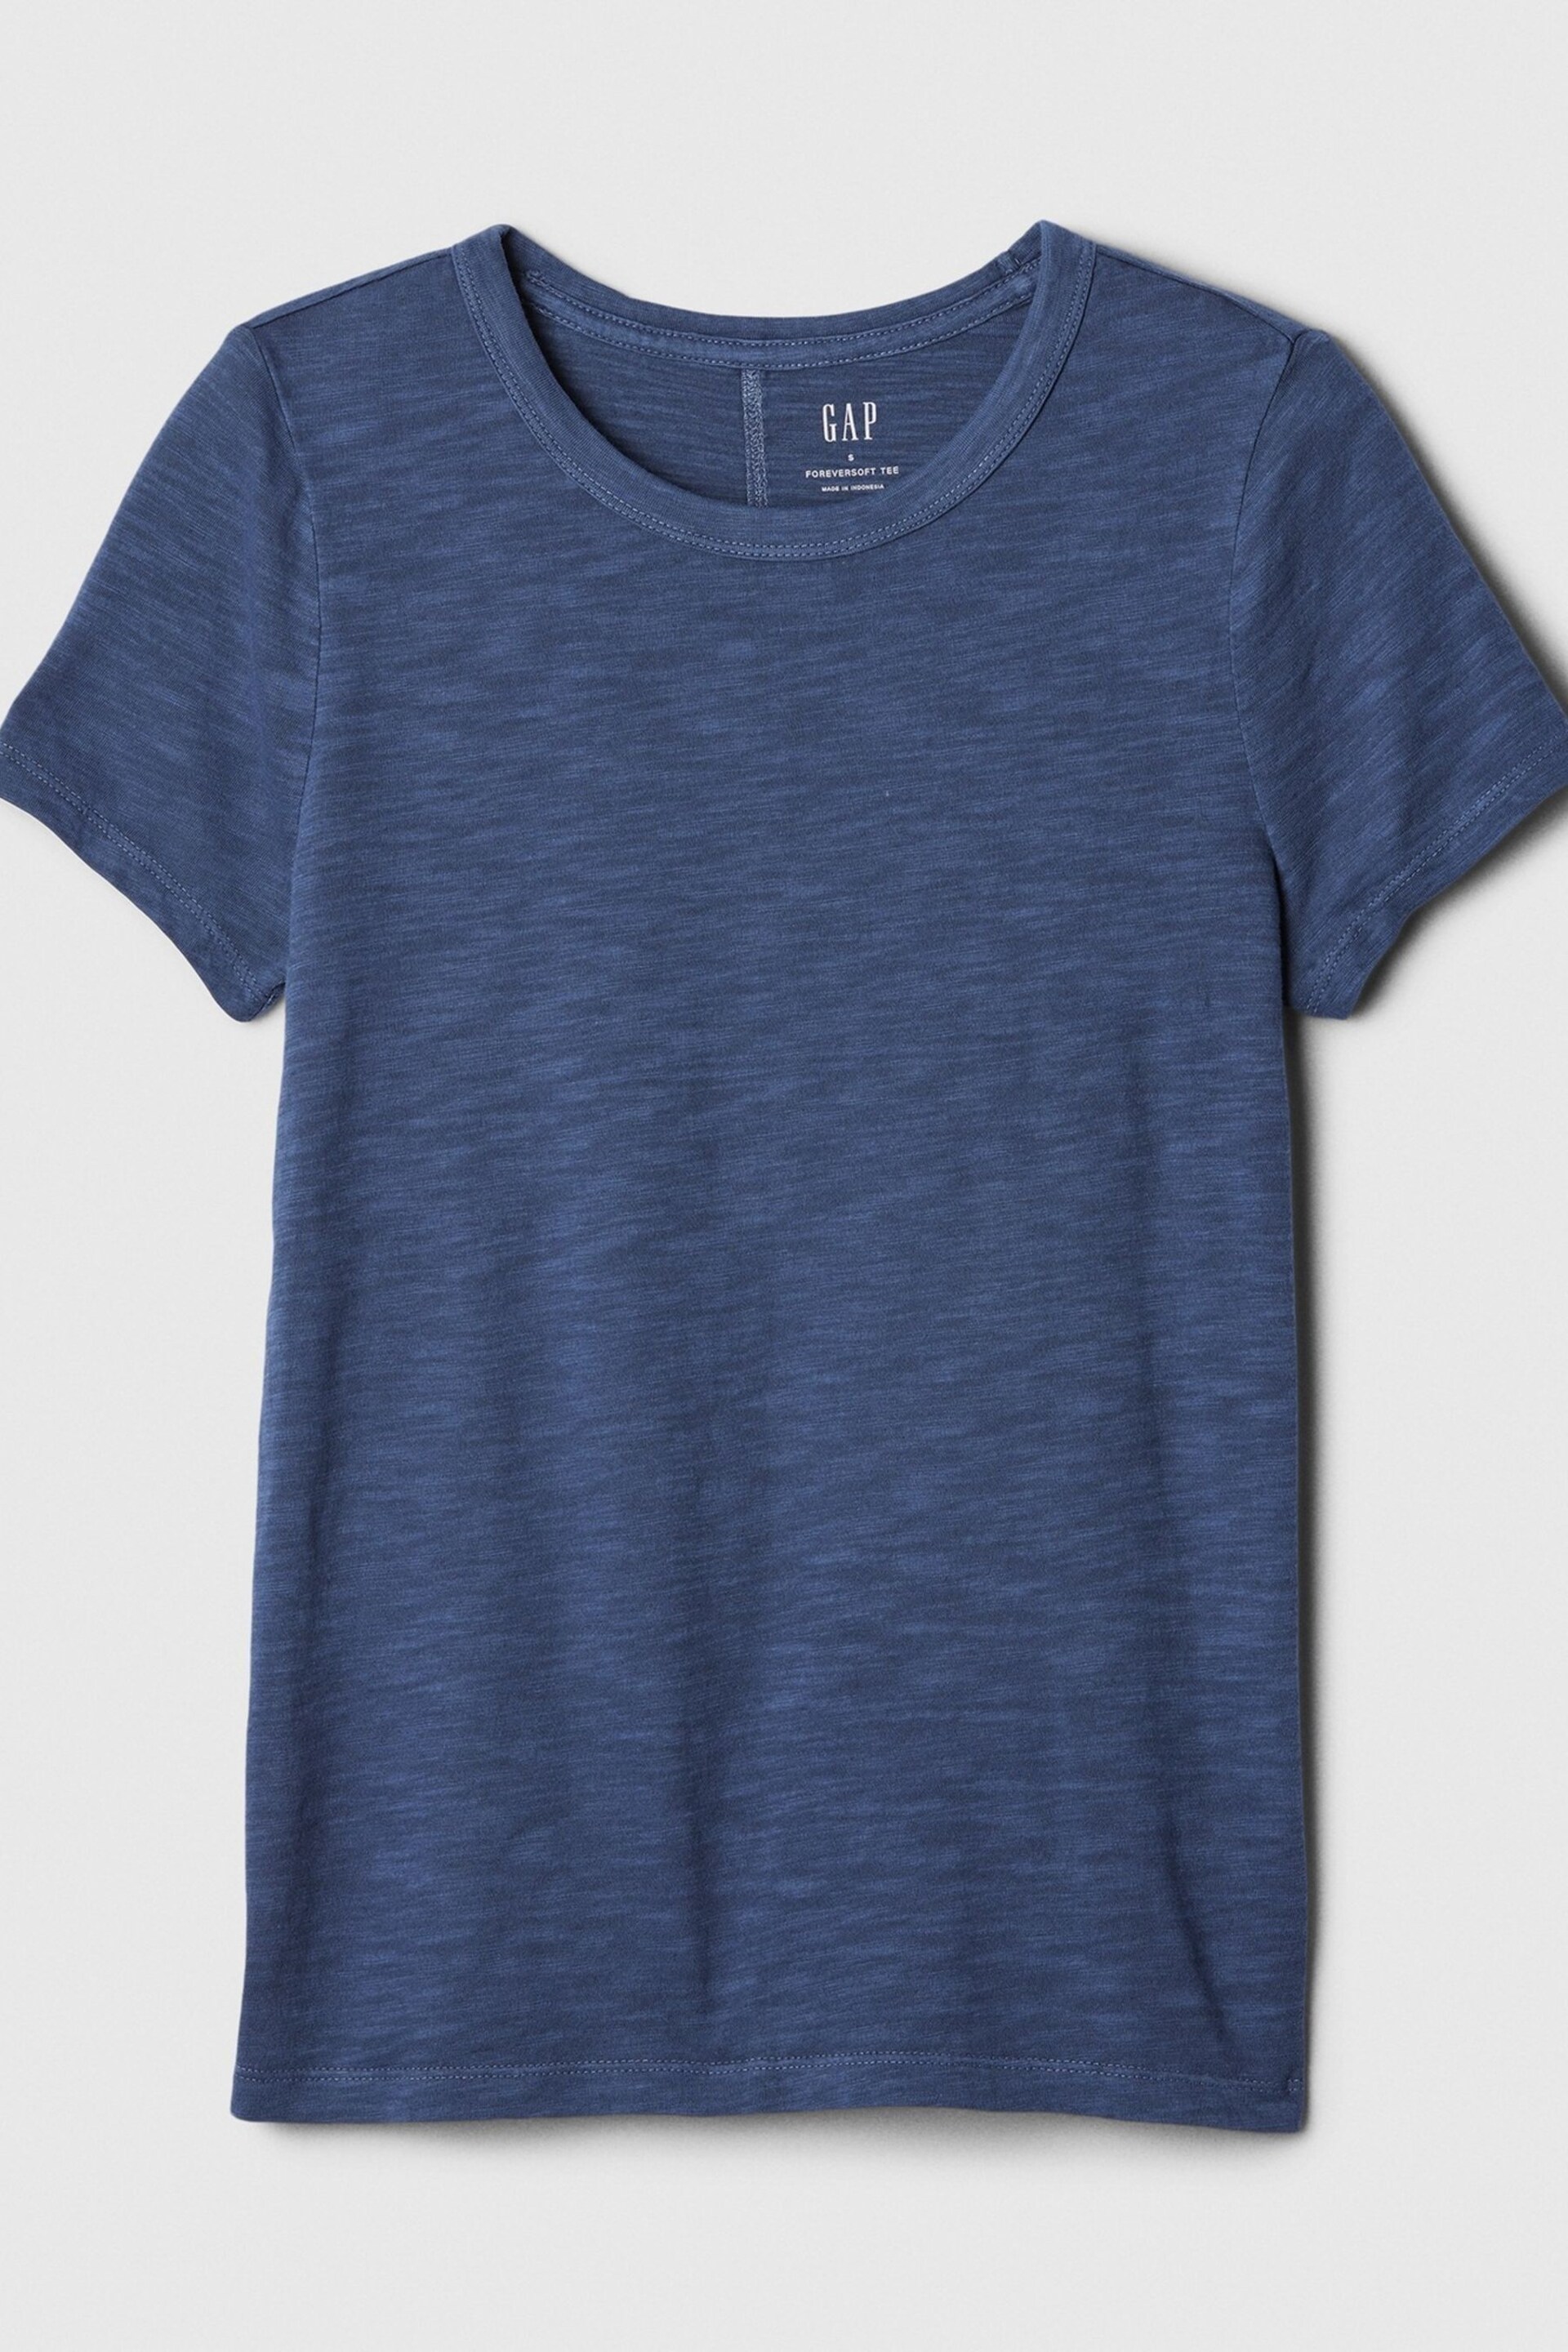 Gap Navy Blue Cotton ForeverSoft Short Sleeve Crew Neck T-Shirt - Image 5 of 5